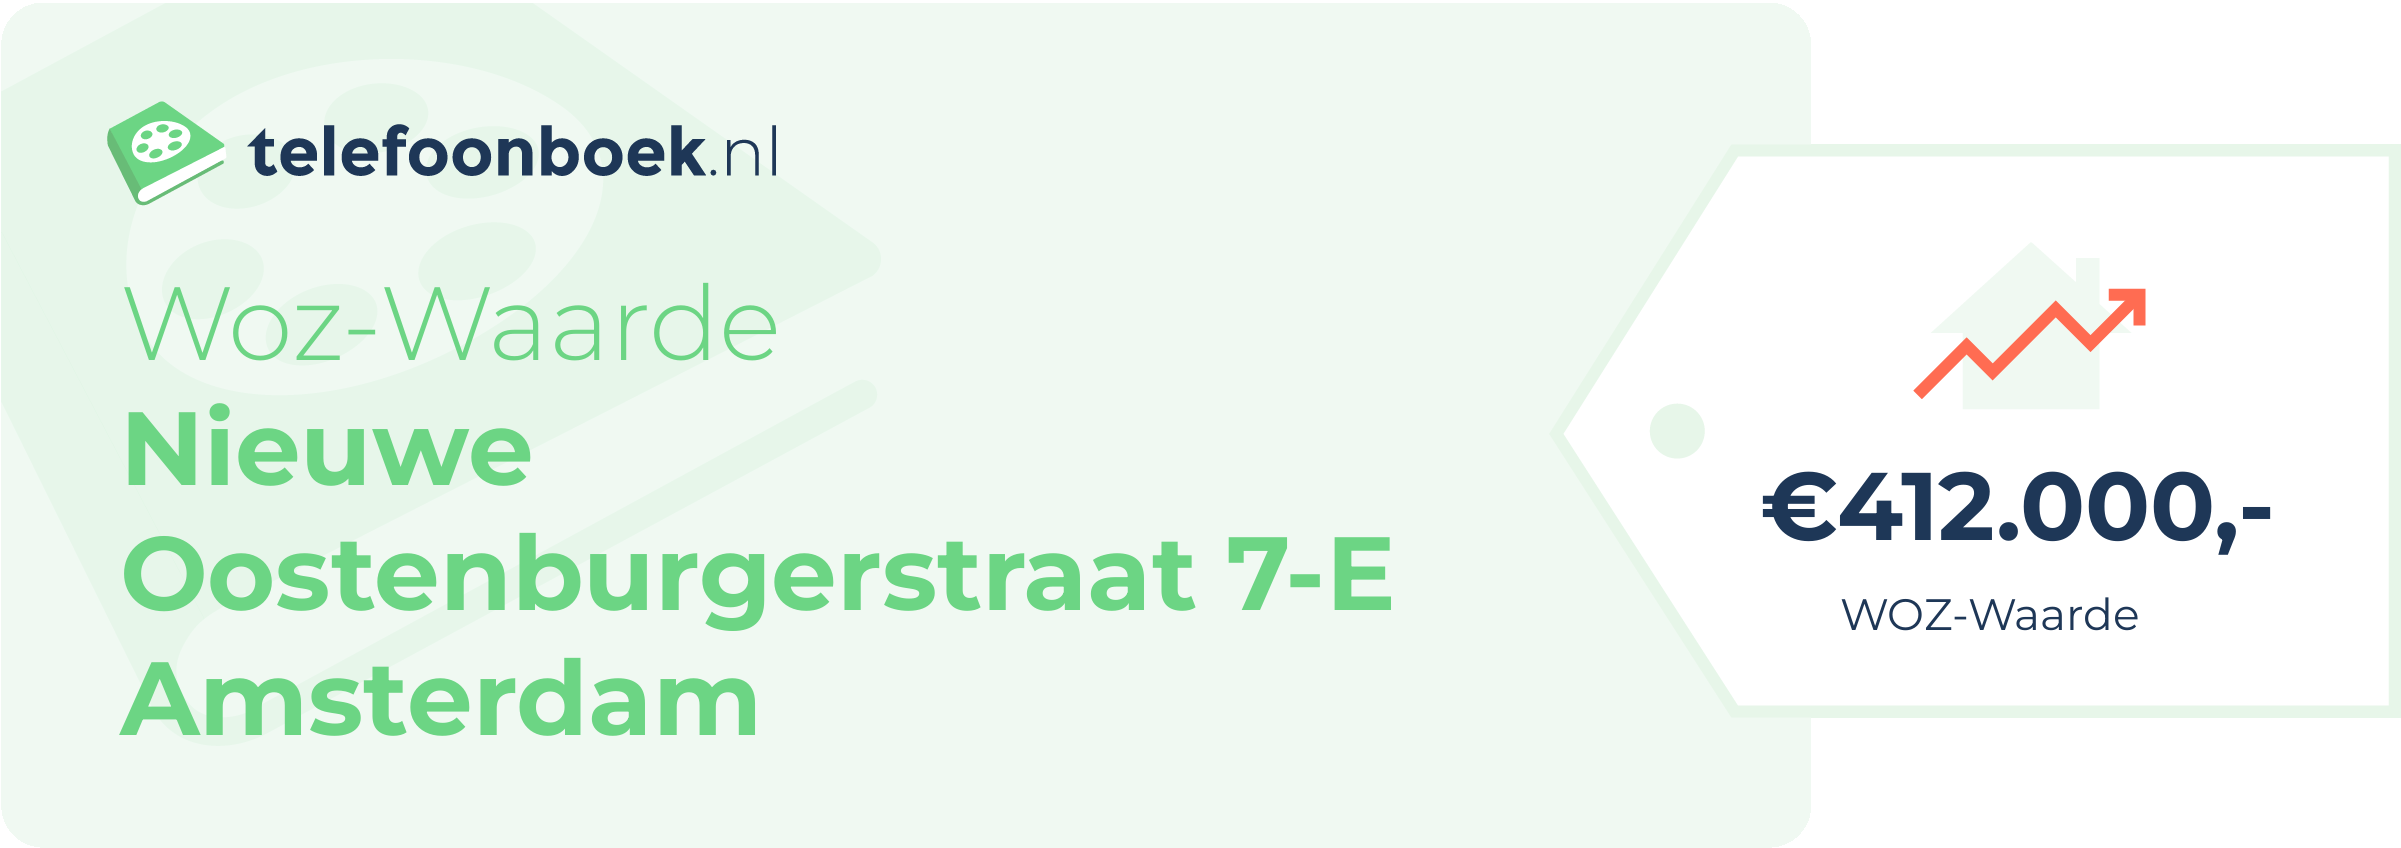 WOZ-waarde Nieuwe Oostenburgerstraat 7-E Amsterdam